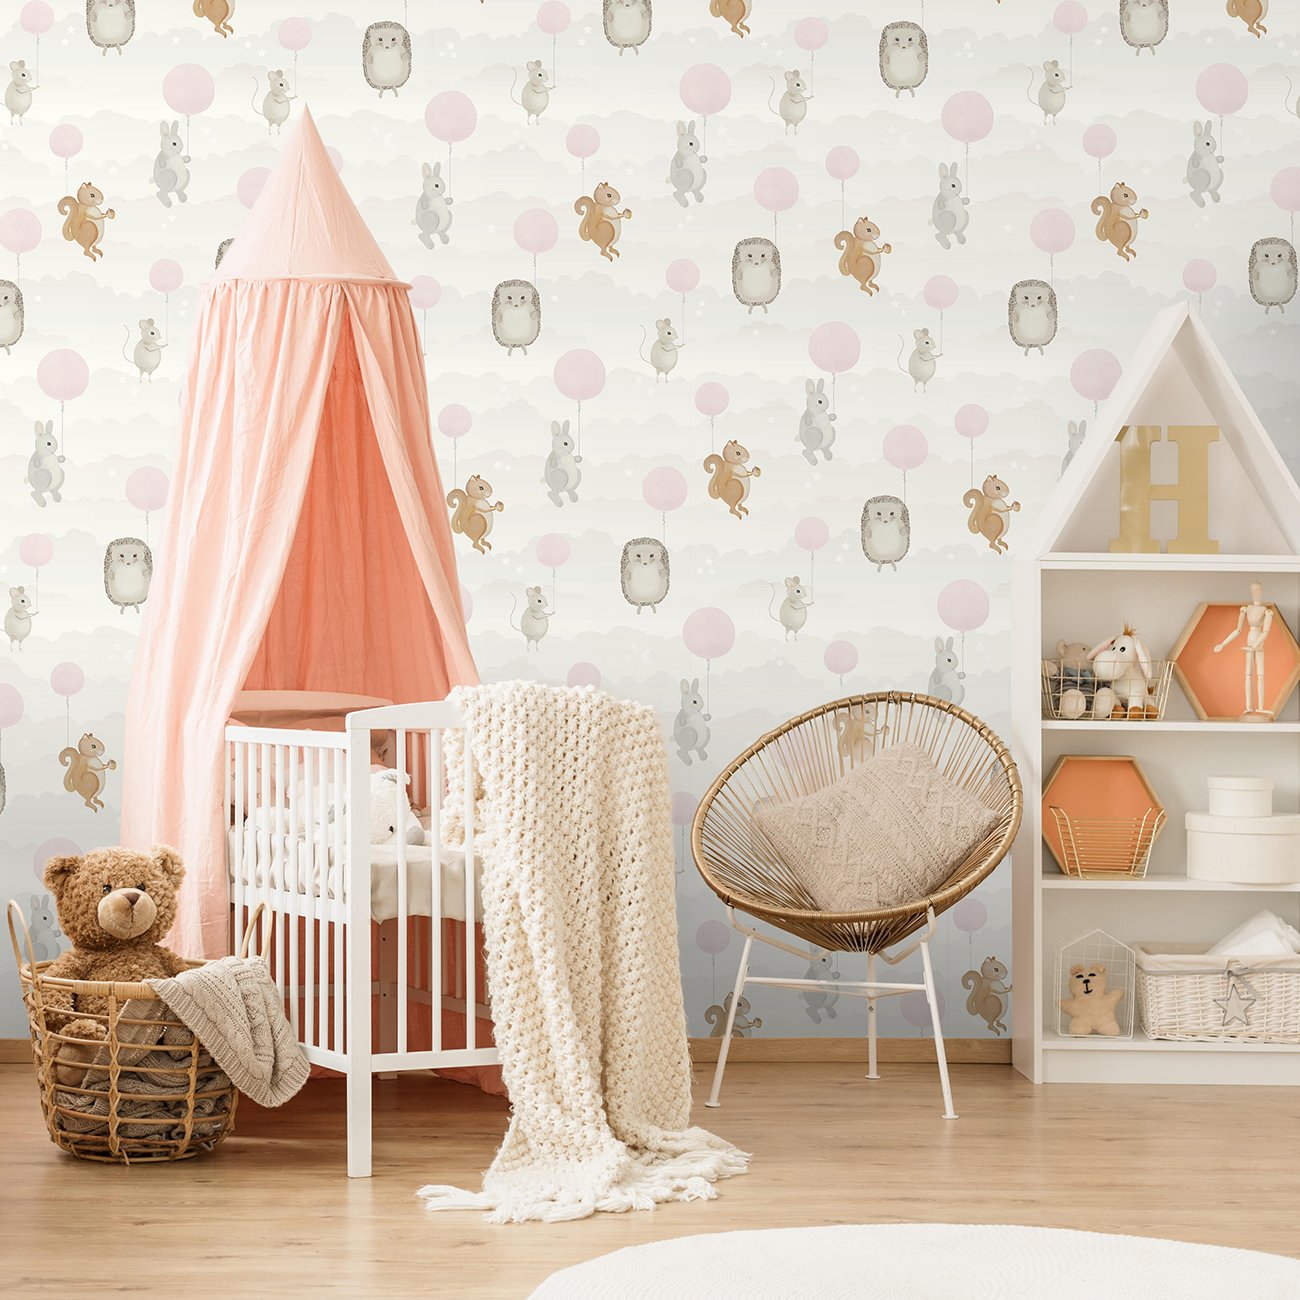 nursery wallpaper,product,furniture,room,pink,infant bed